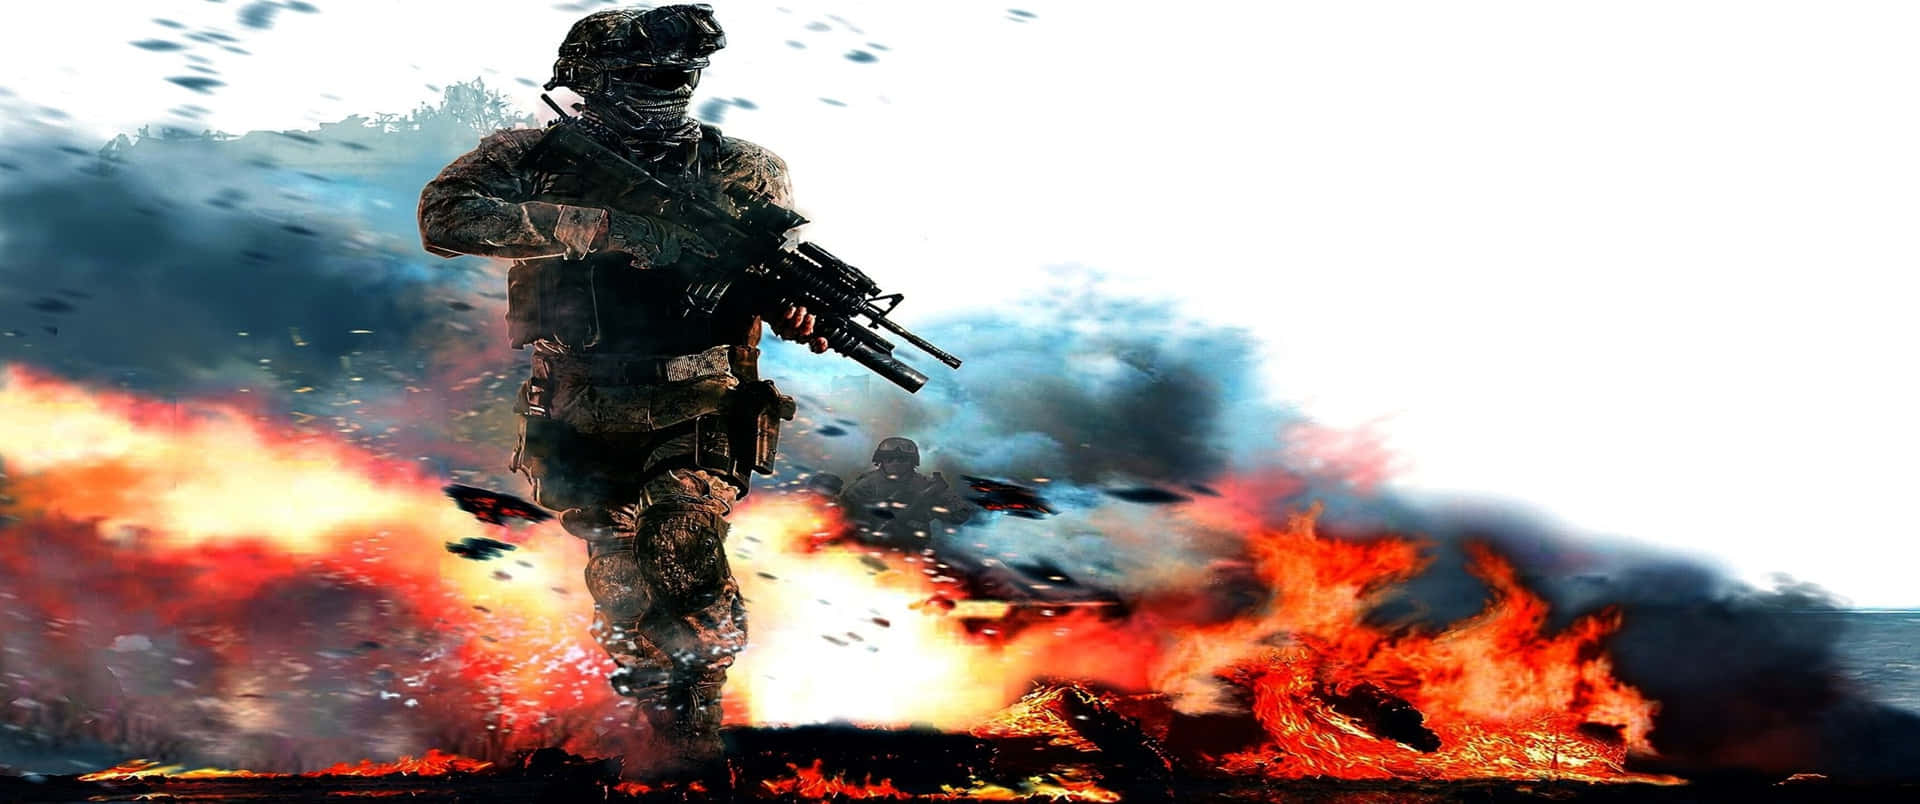 Paisajeahumado Fondo De Pantalla Call Of Duty Modern Warfare En 3440x1440p